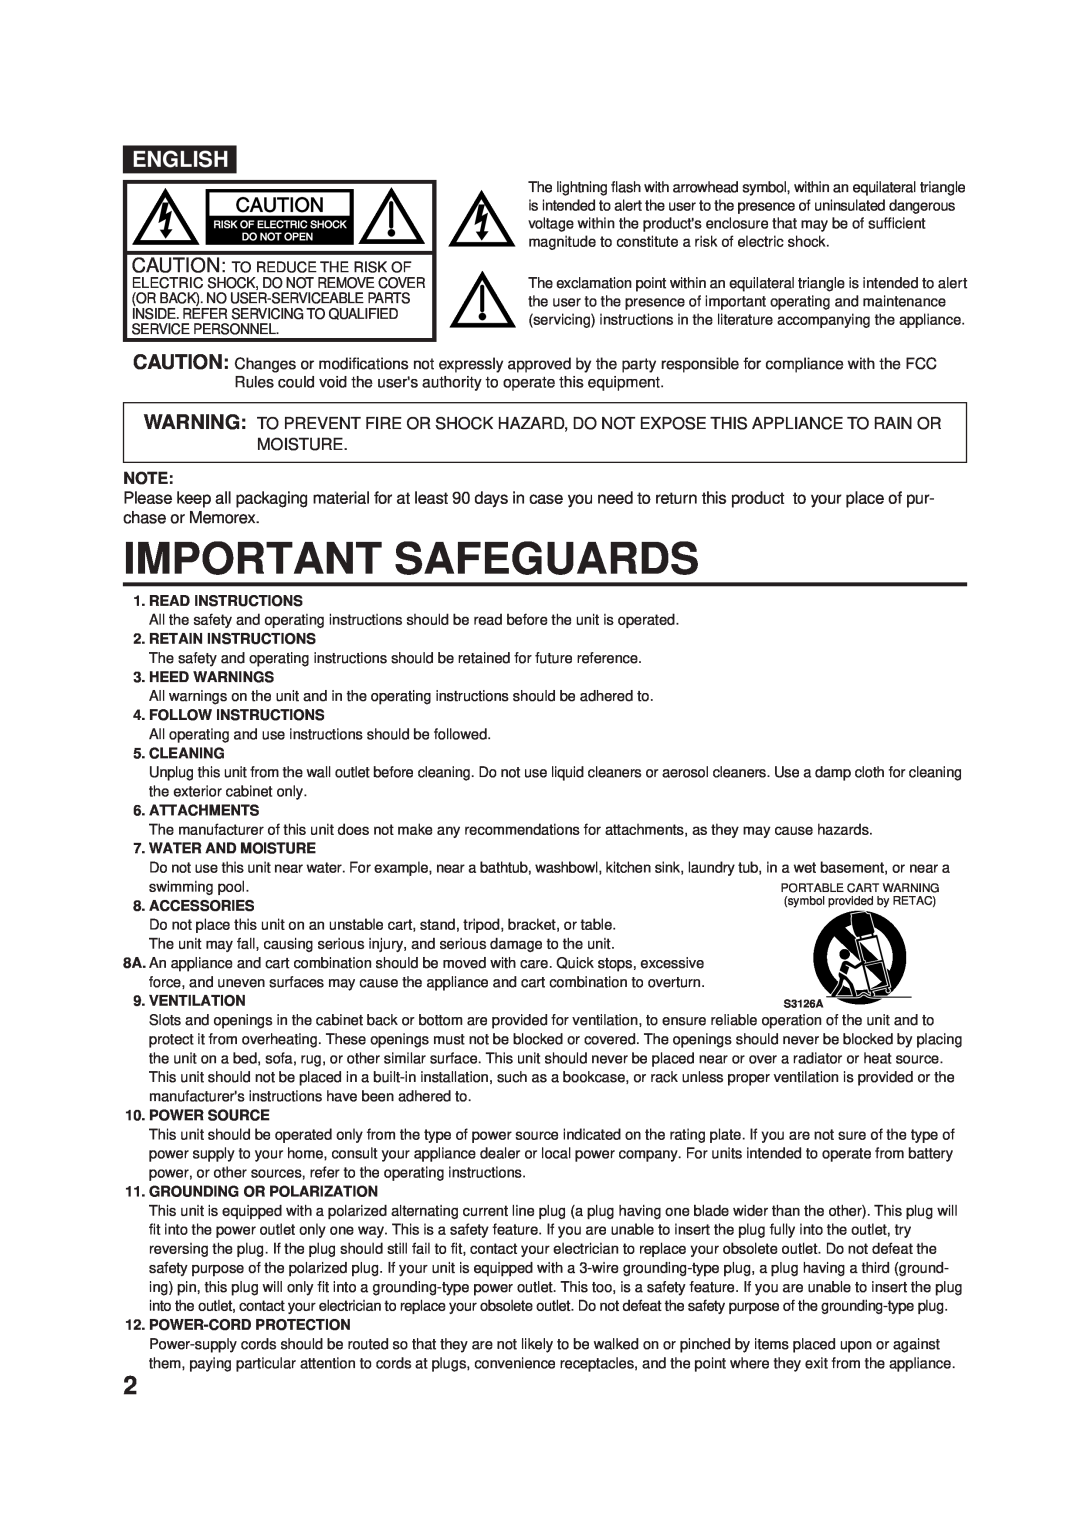 Memorex DT1900-C manual Important Safeguards, English 